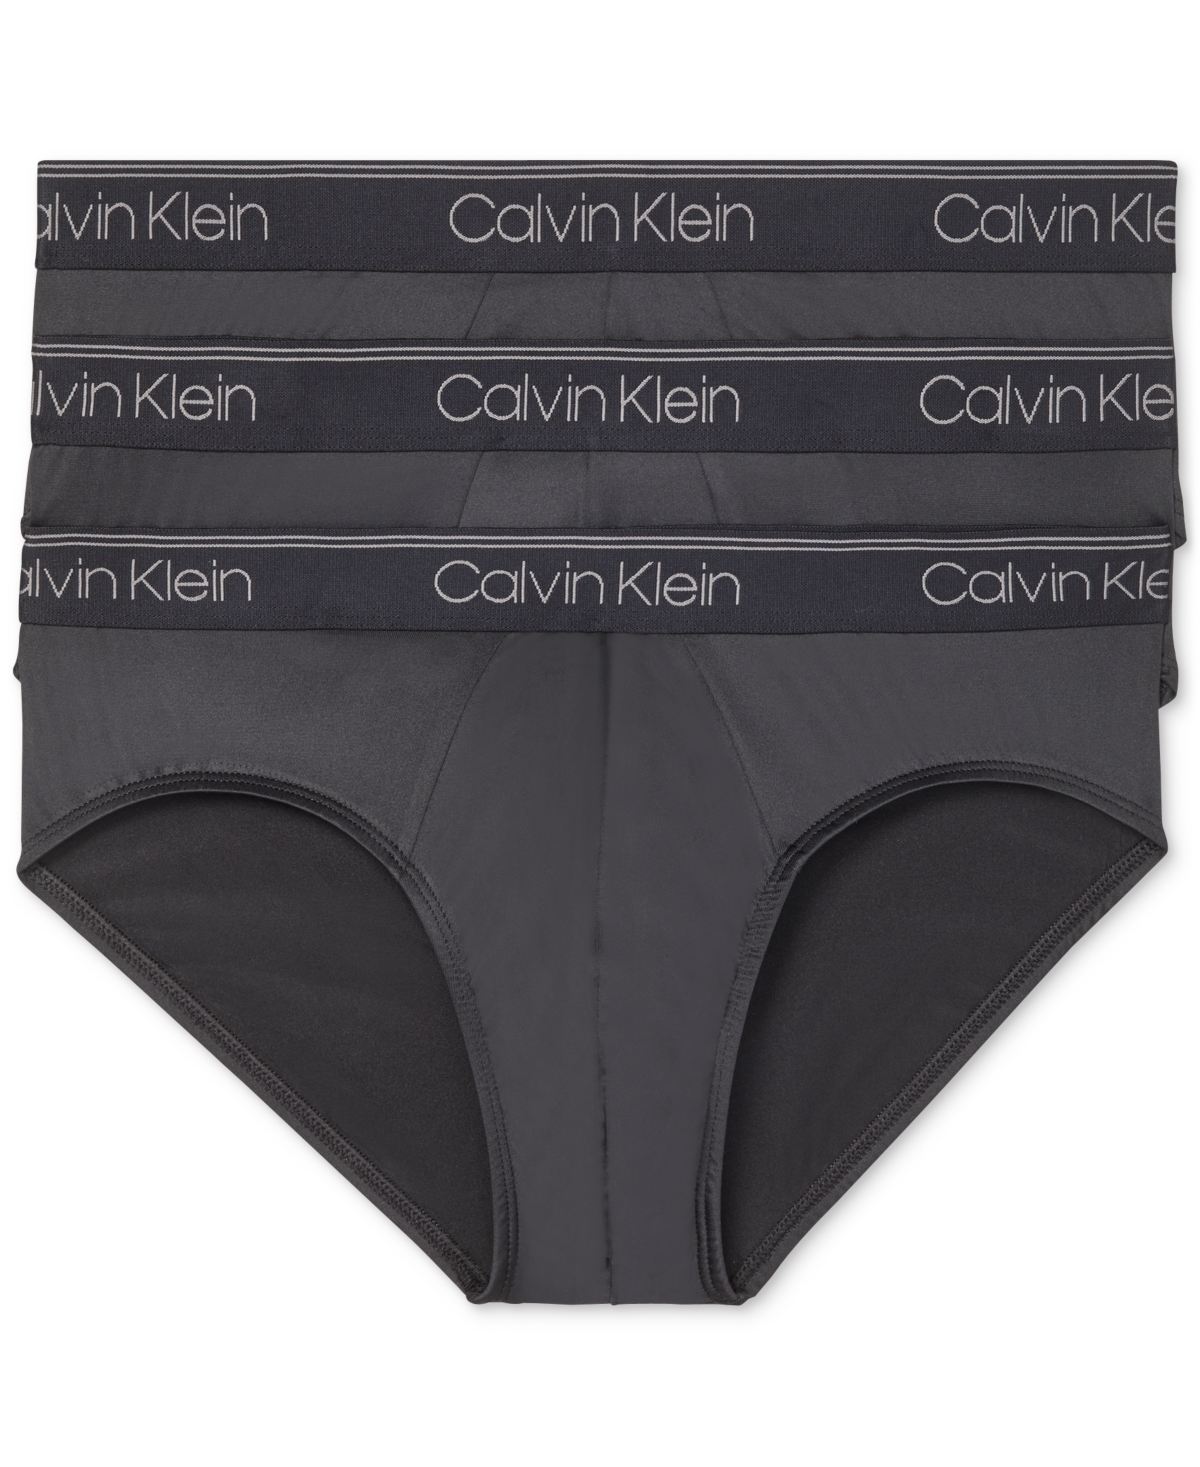 UPC 790812269992 product image for Calvin Klein Men's 3-Pack Microfiber Stretch Low-Rise Briefs Underwear | upcitemdb.com